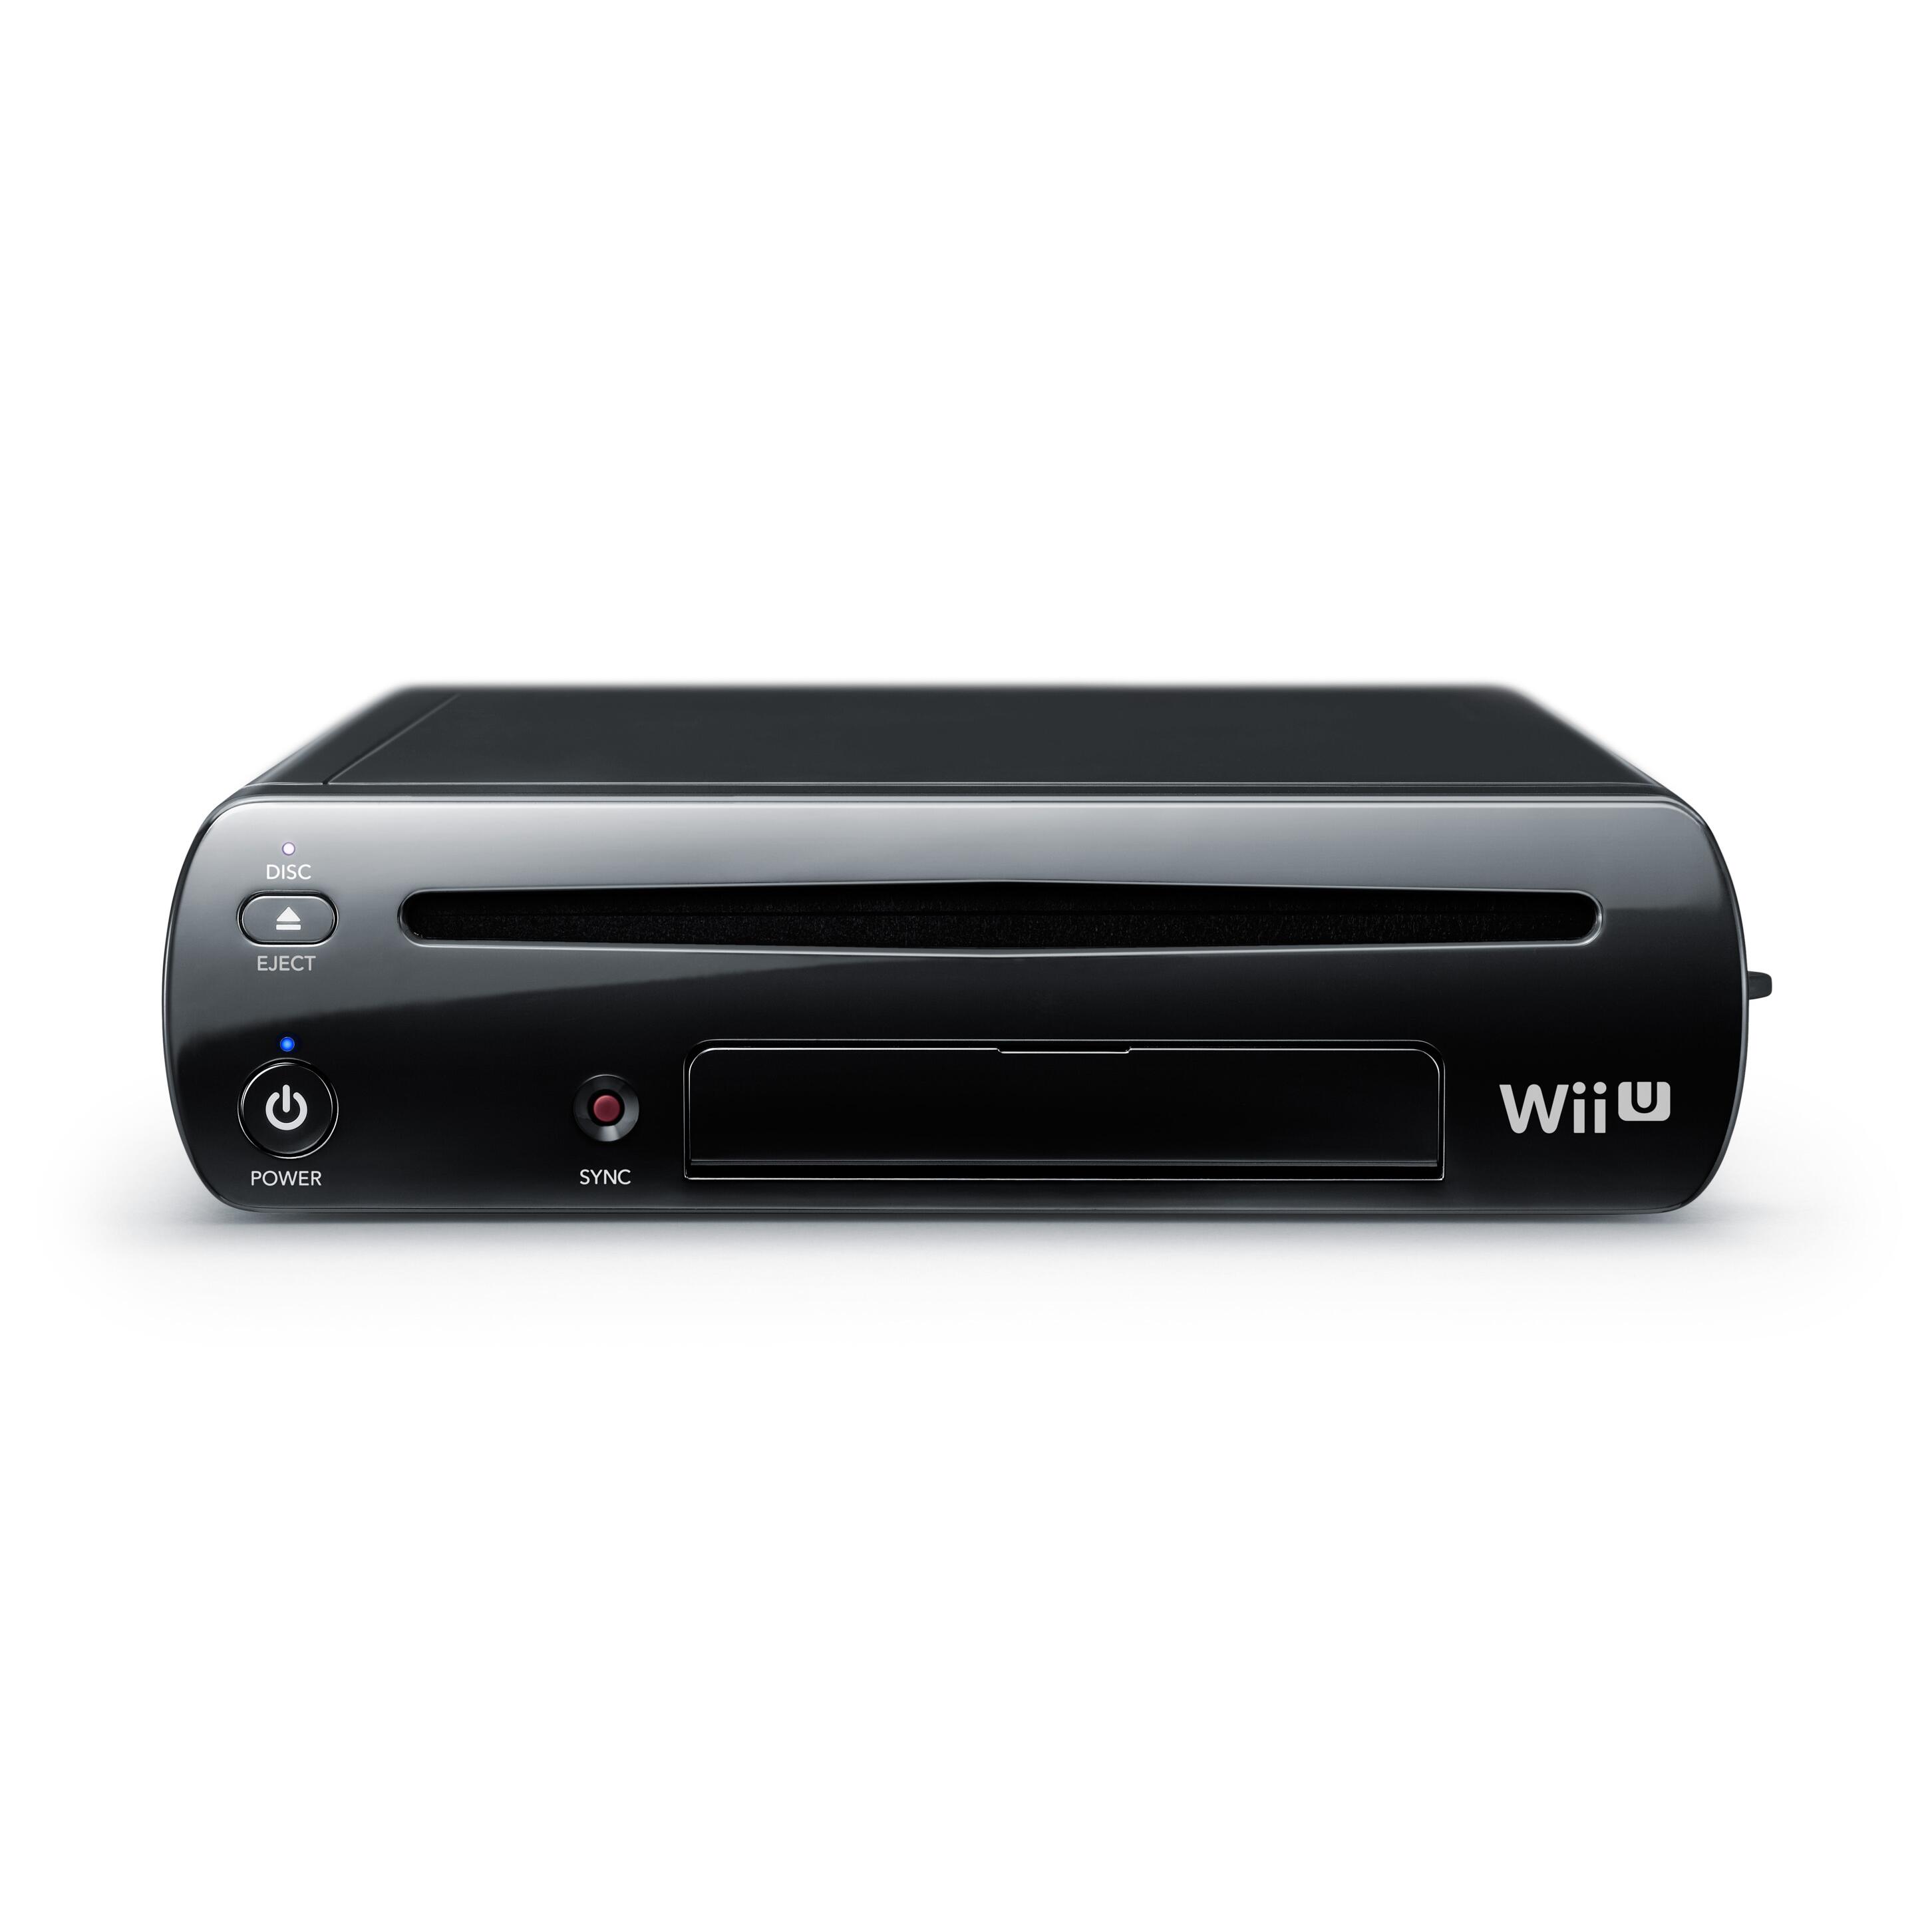 Lui Mislukking lood Wii U Console (32GB) - Zwart (Wii) kopen - €73